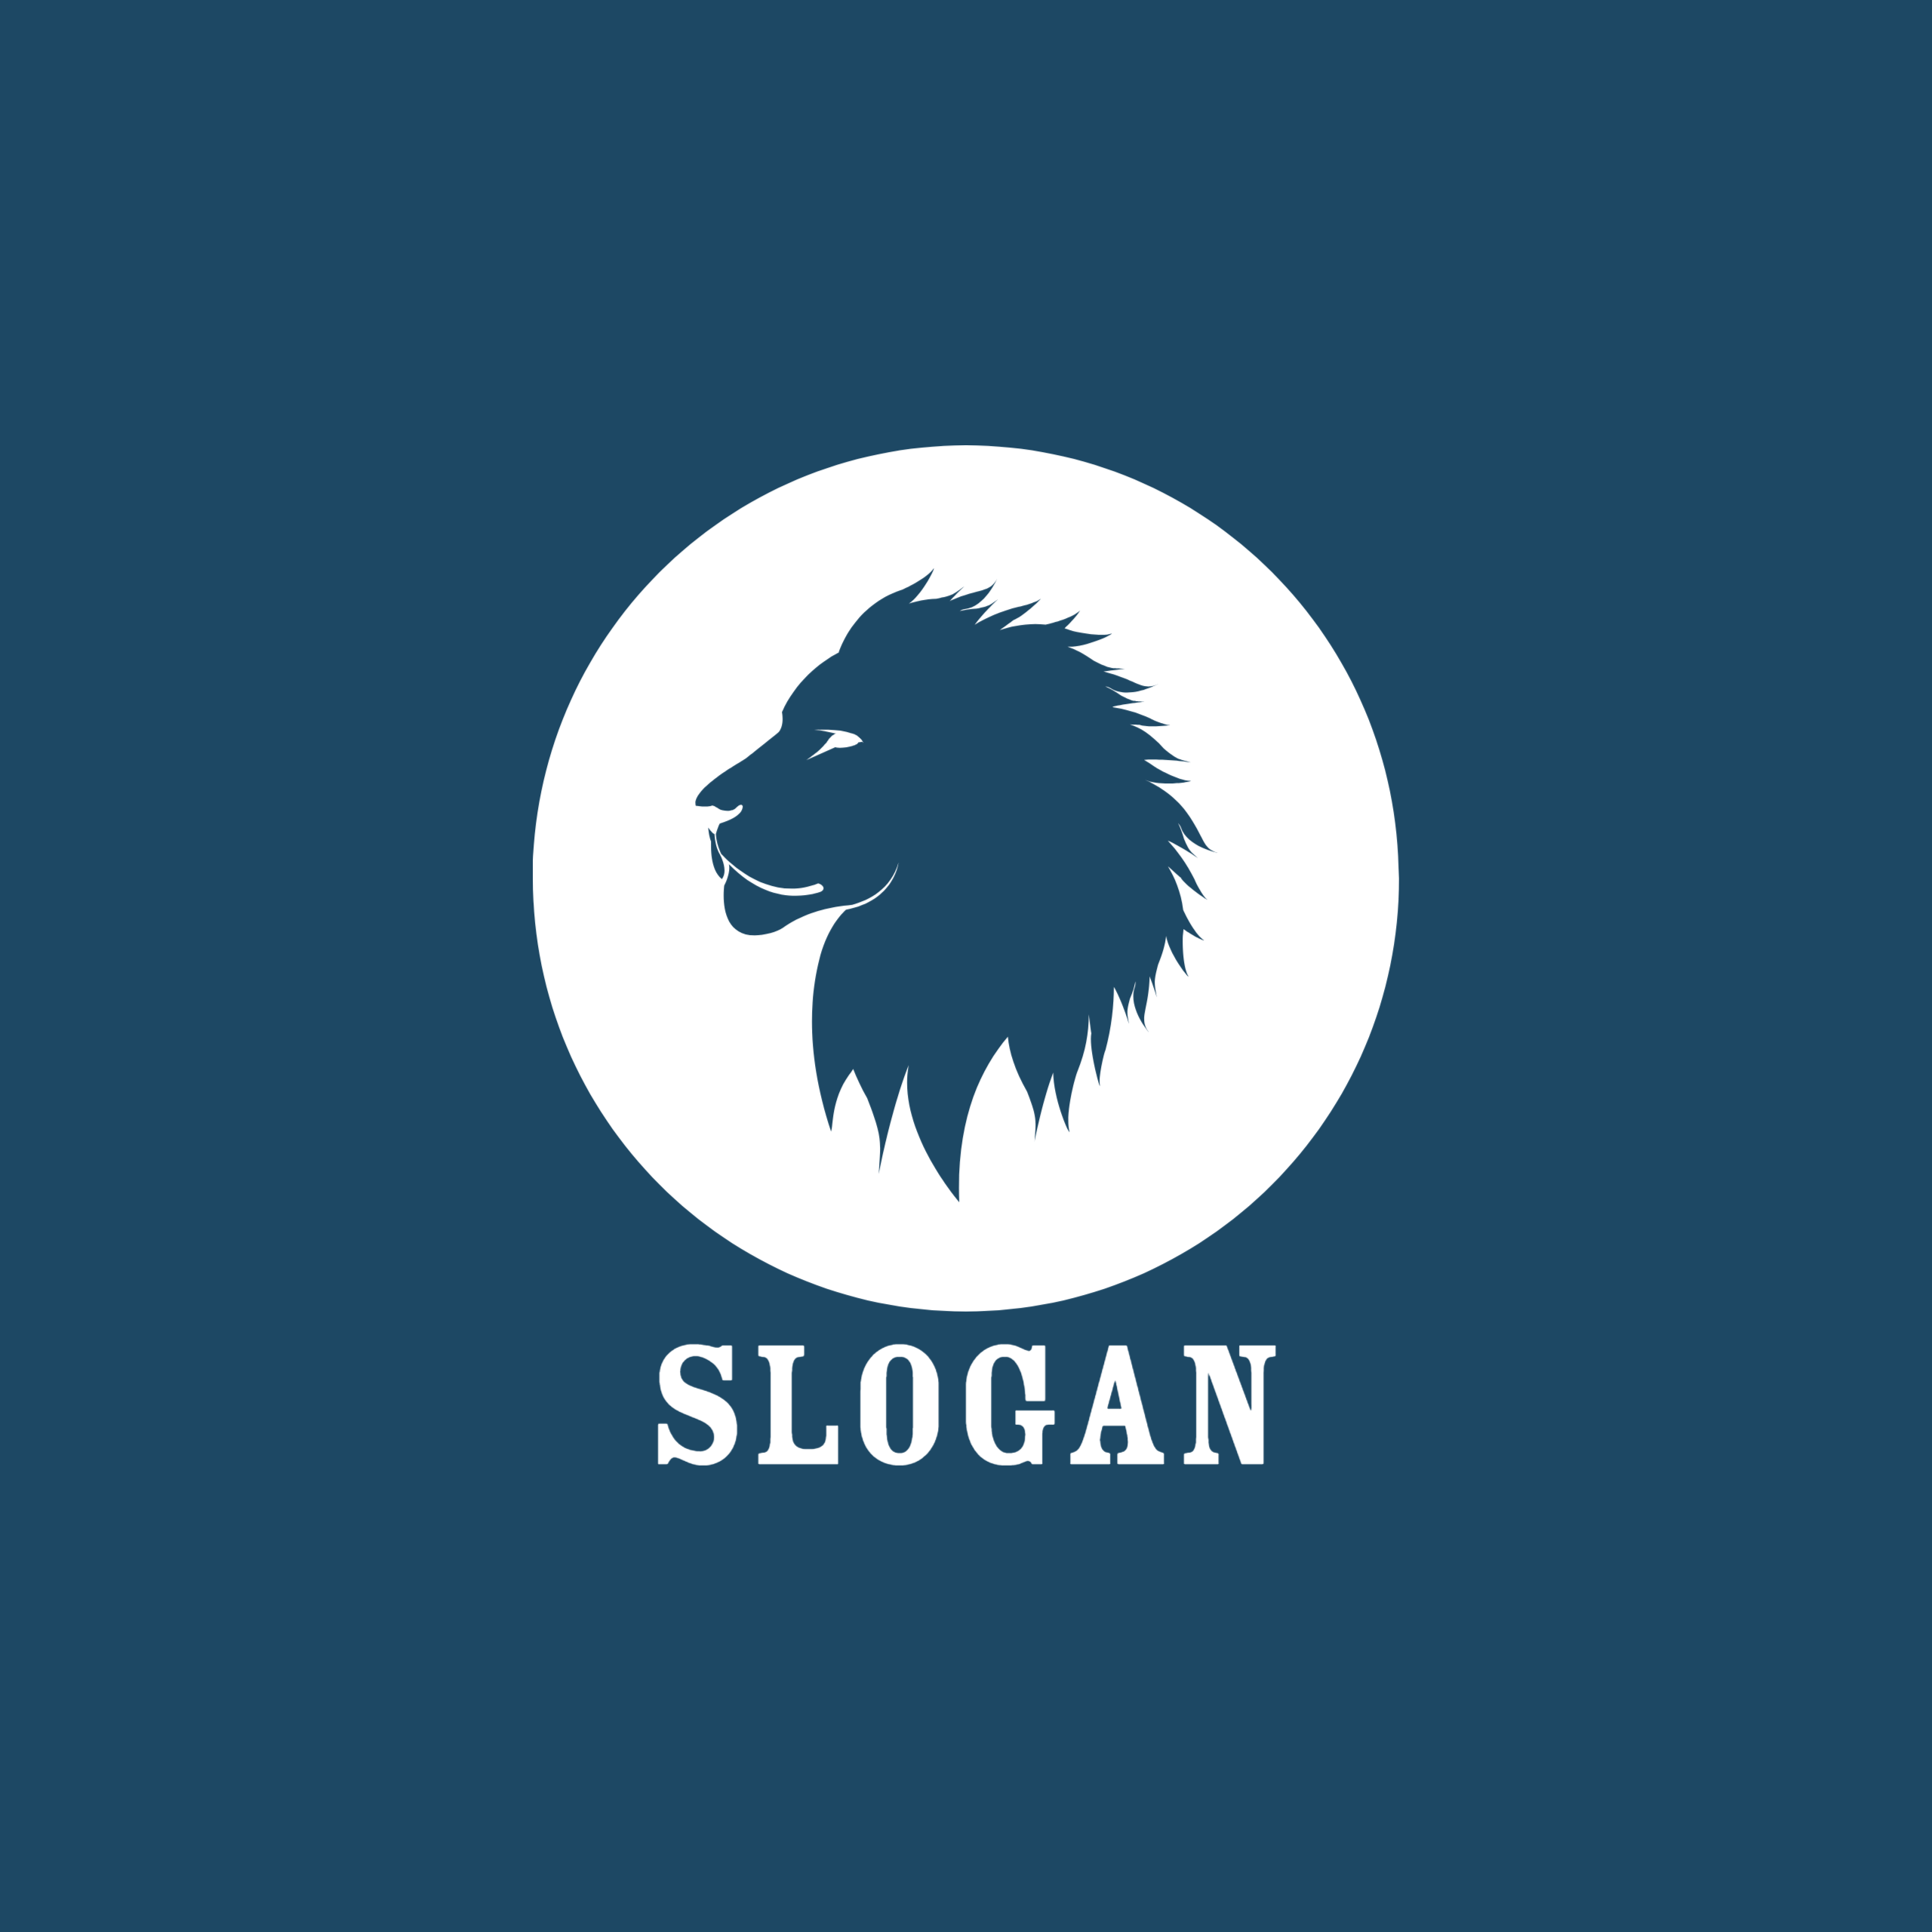 Lion Minimal Creative Logos Bundle cover image.